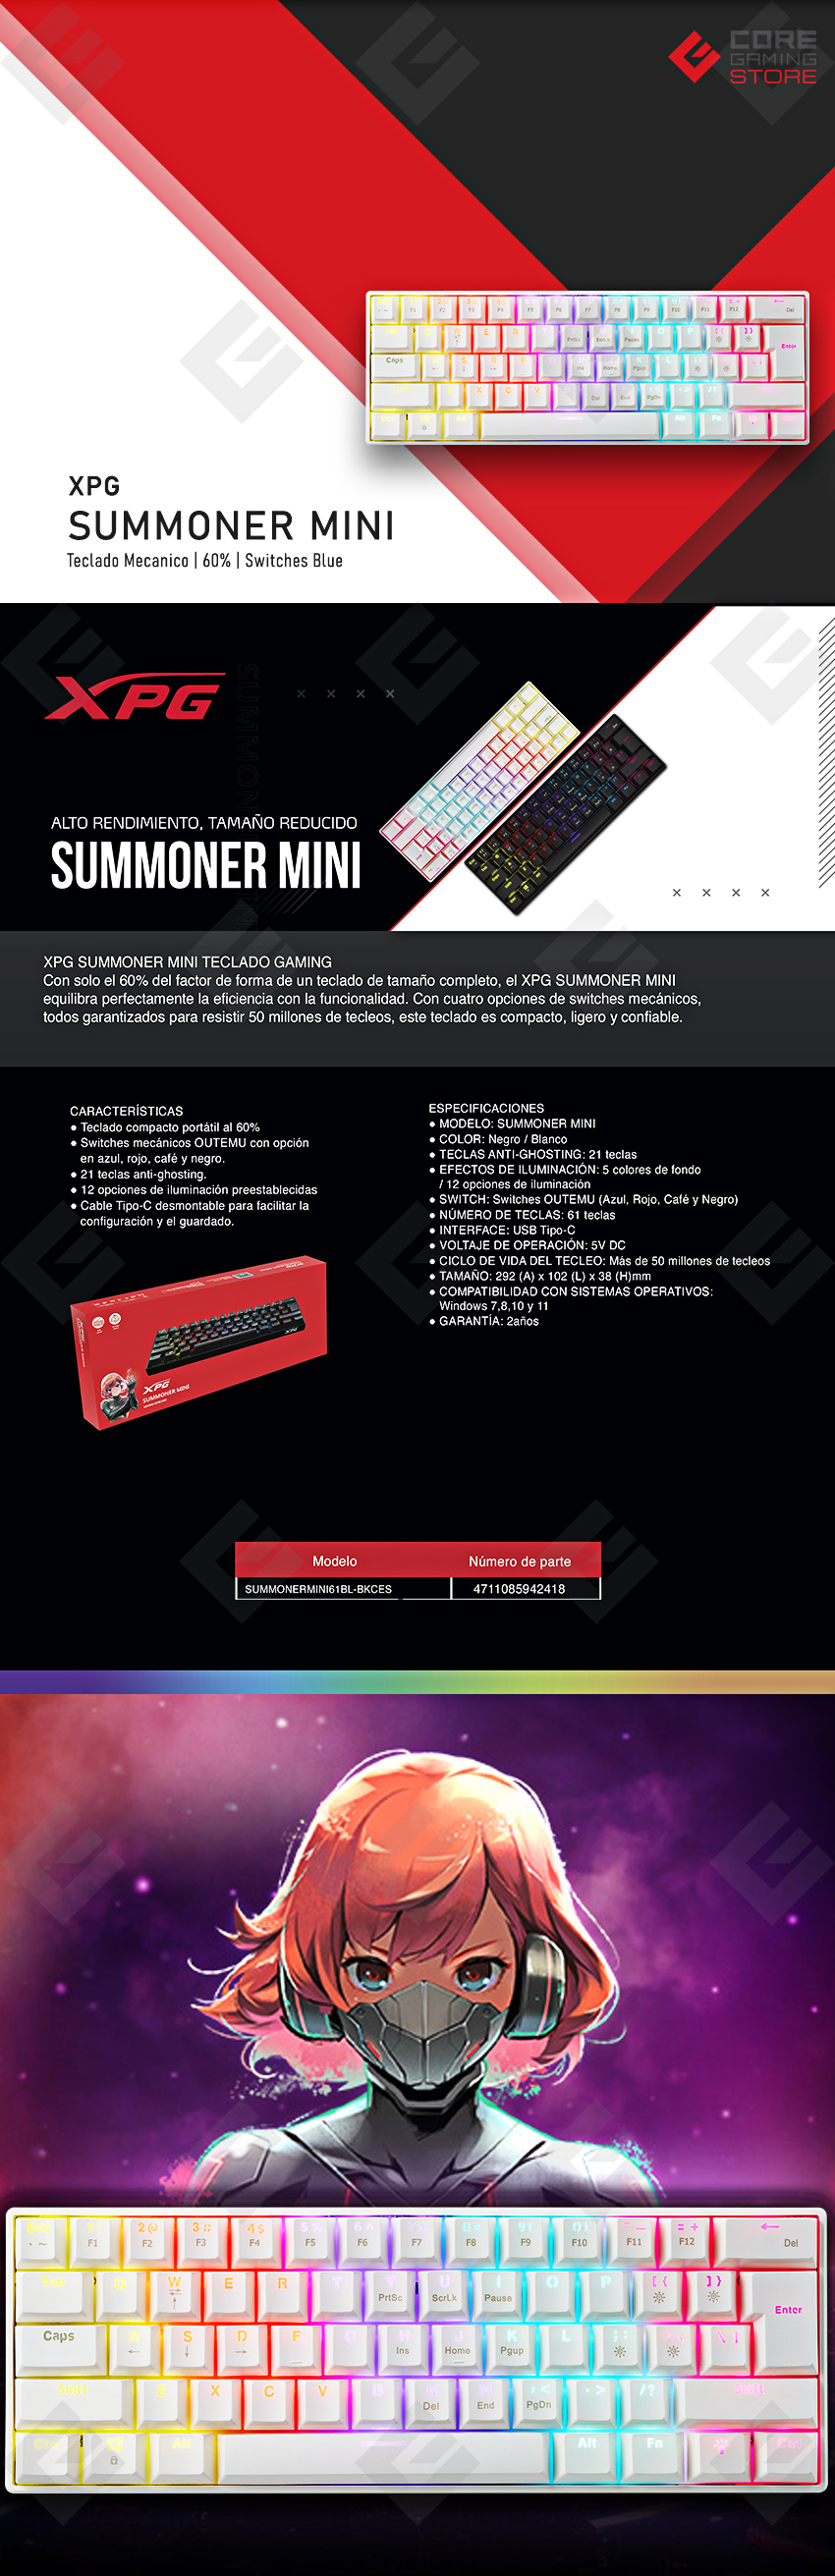 Teclado Gamer Mecanico XPG Summoner Mini | Blanco | Switches Outemu Blue | 60% - SUMMONERMINI61BL-WHCES